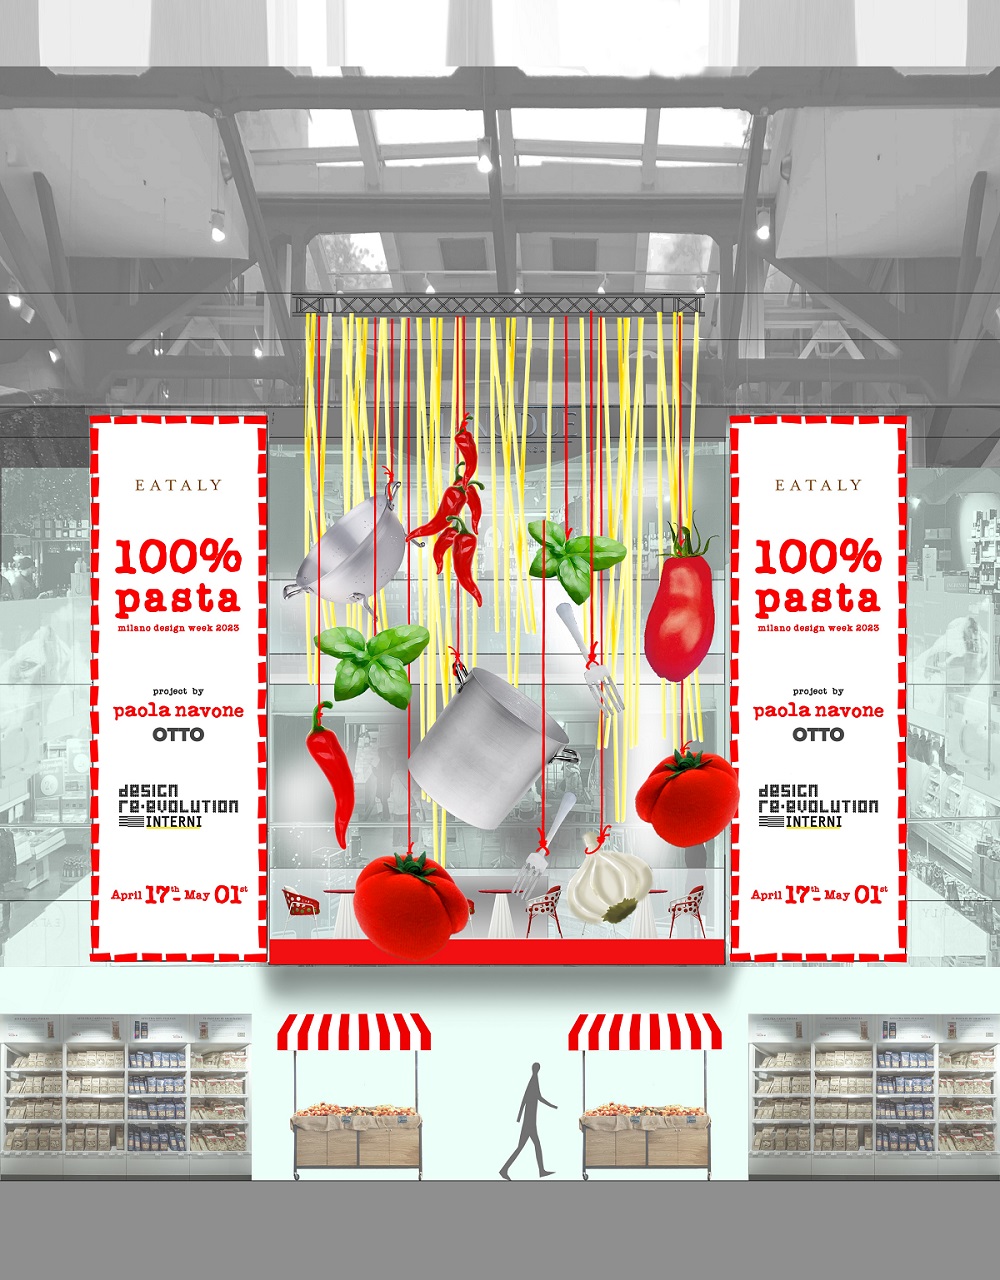 100% Pasta, EATALY, Interni DEsign REvolution by Paola Navone OTTO Studio